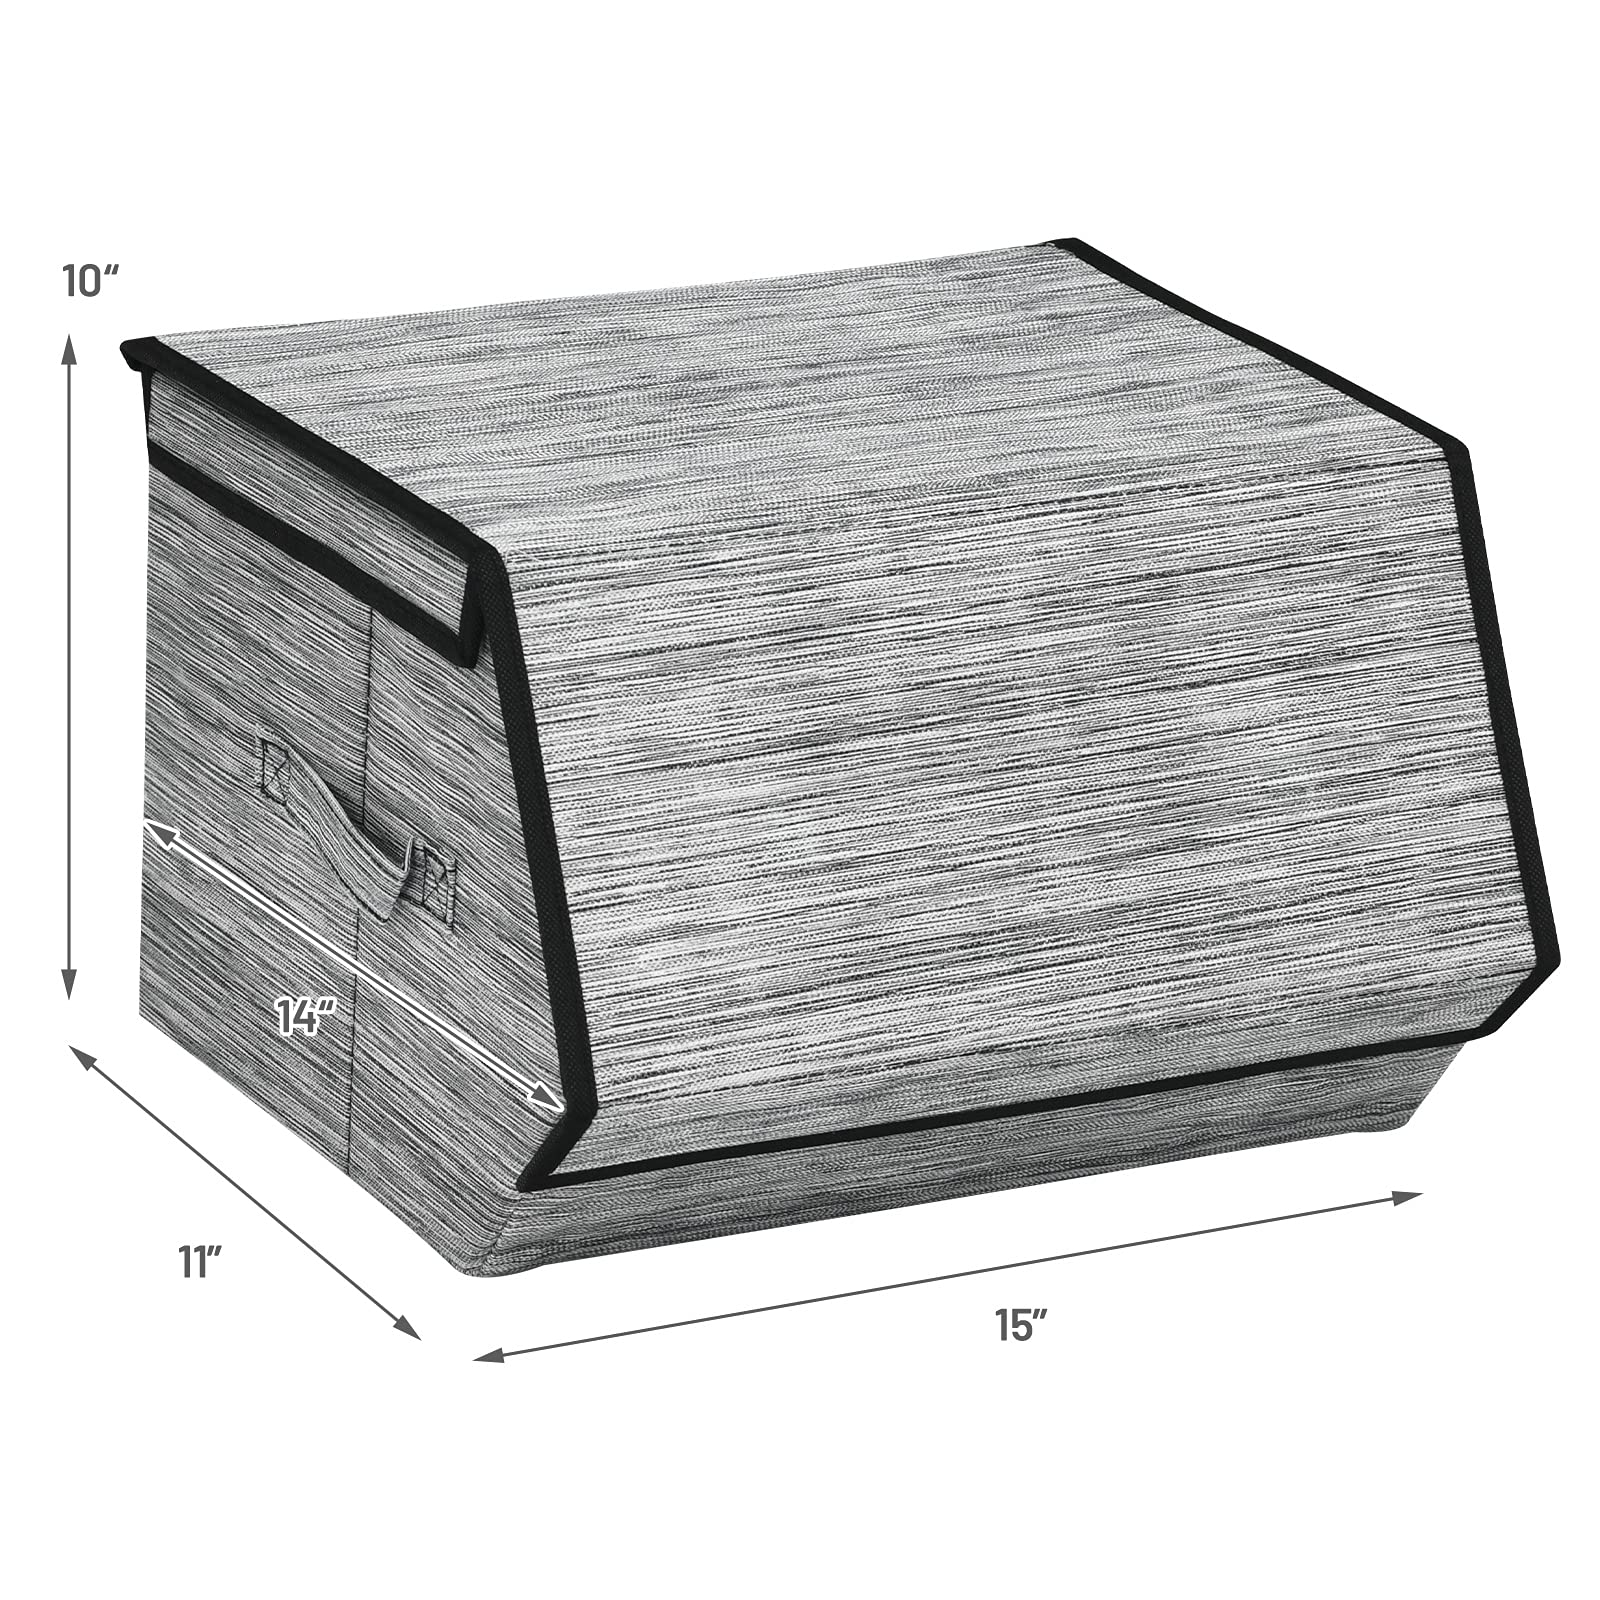 Giantex Storage Bins Set of 4 Stackable Cubes Fabric Baskets w/ Lid, Handles